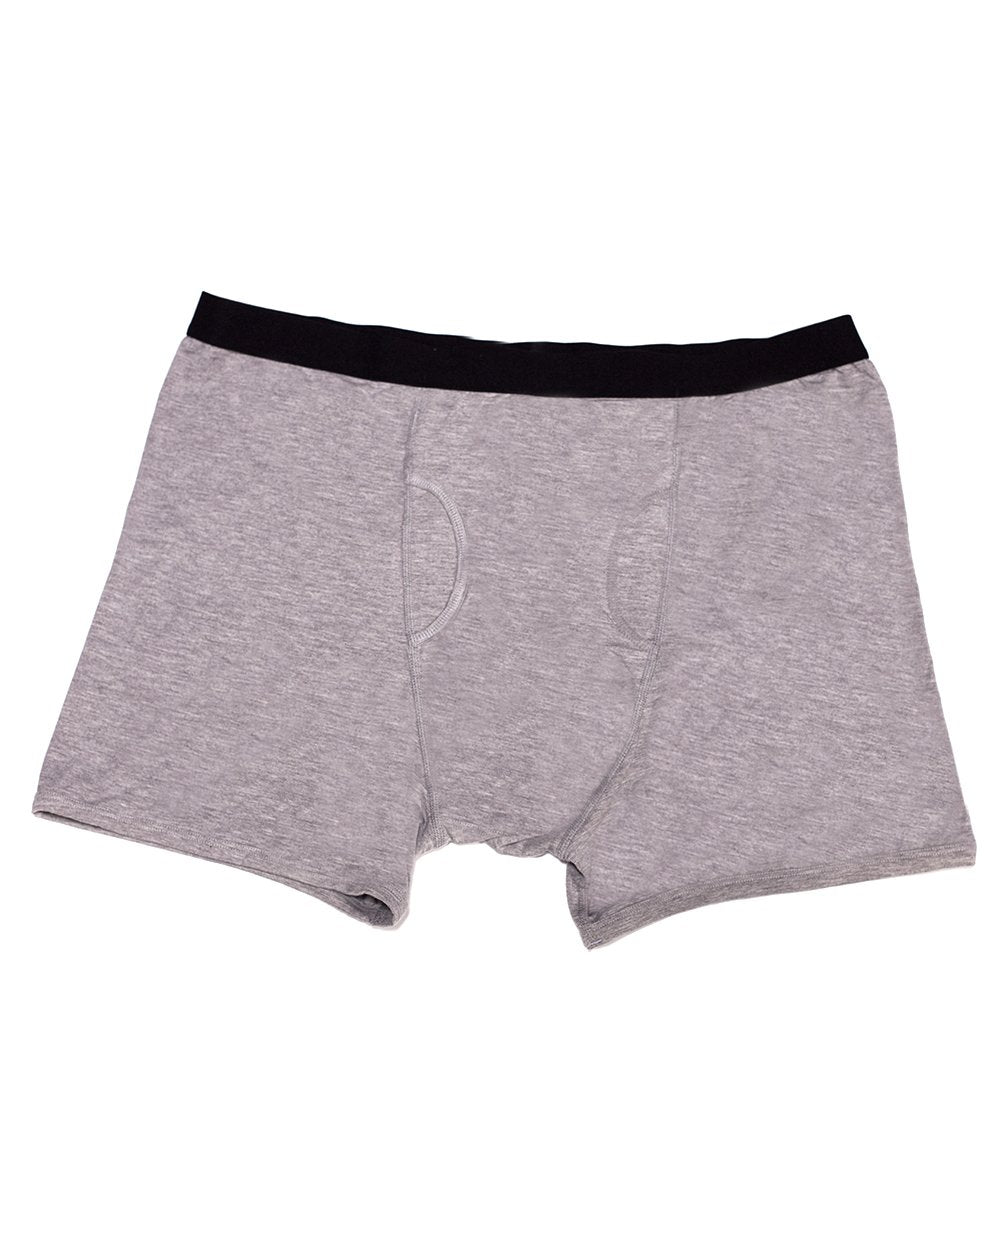 Men's Hide Your Stash Boxer Briefs with Secret Hidden Pocket Underwear, 2  Packs (Black)